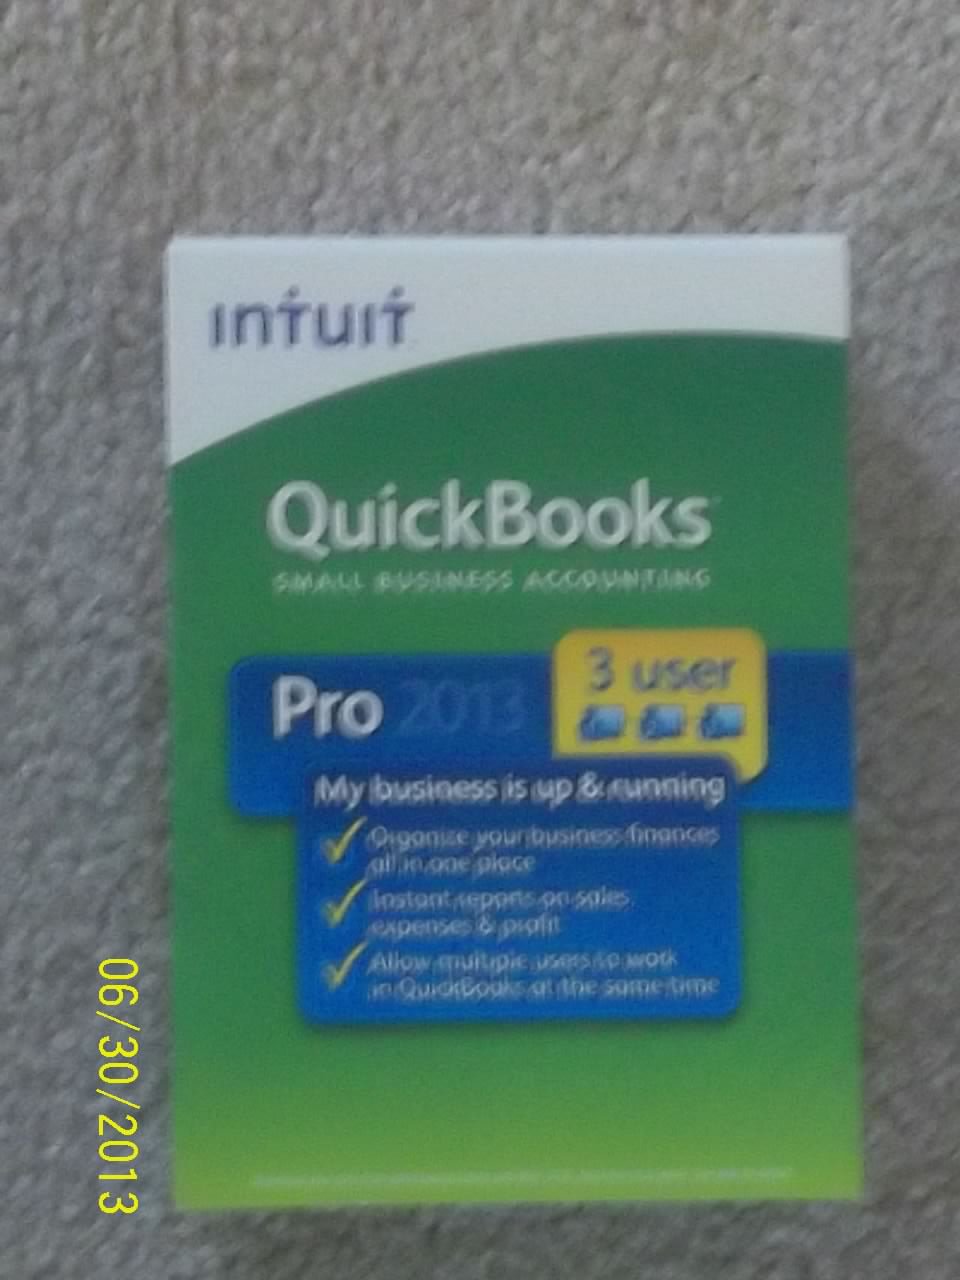 quickbooks upgrade from 2014 to 2016